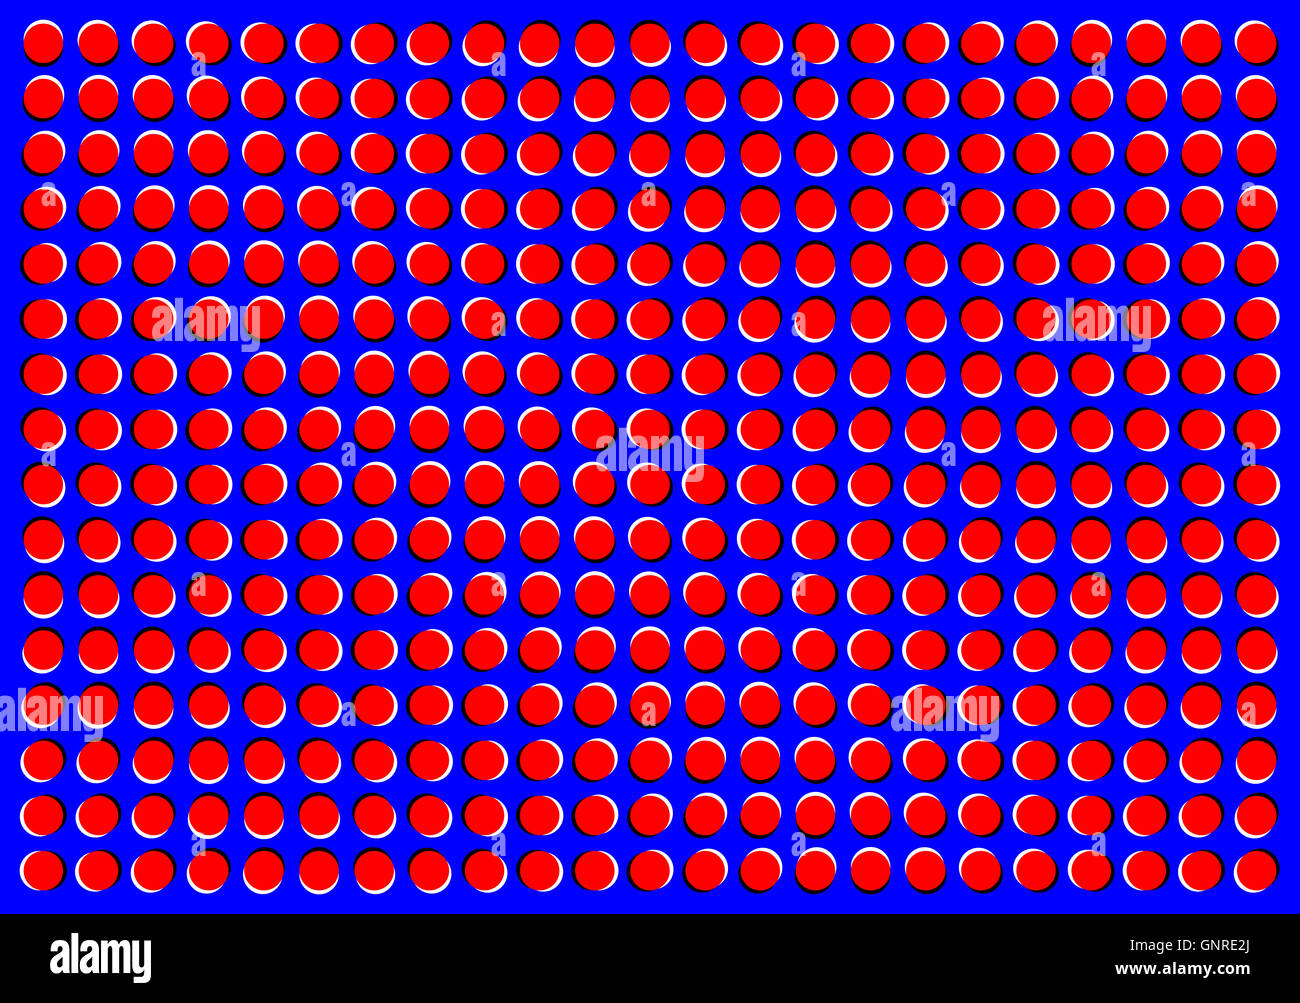 Floating dots peripheral drift illusion. Motion illusion. Stock Photo